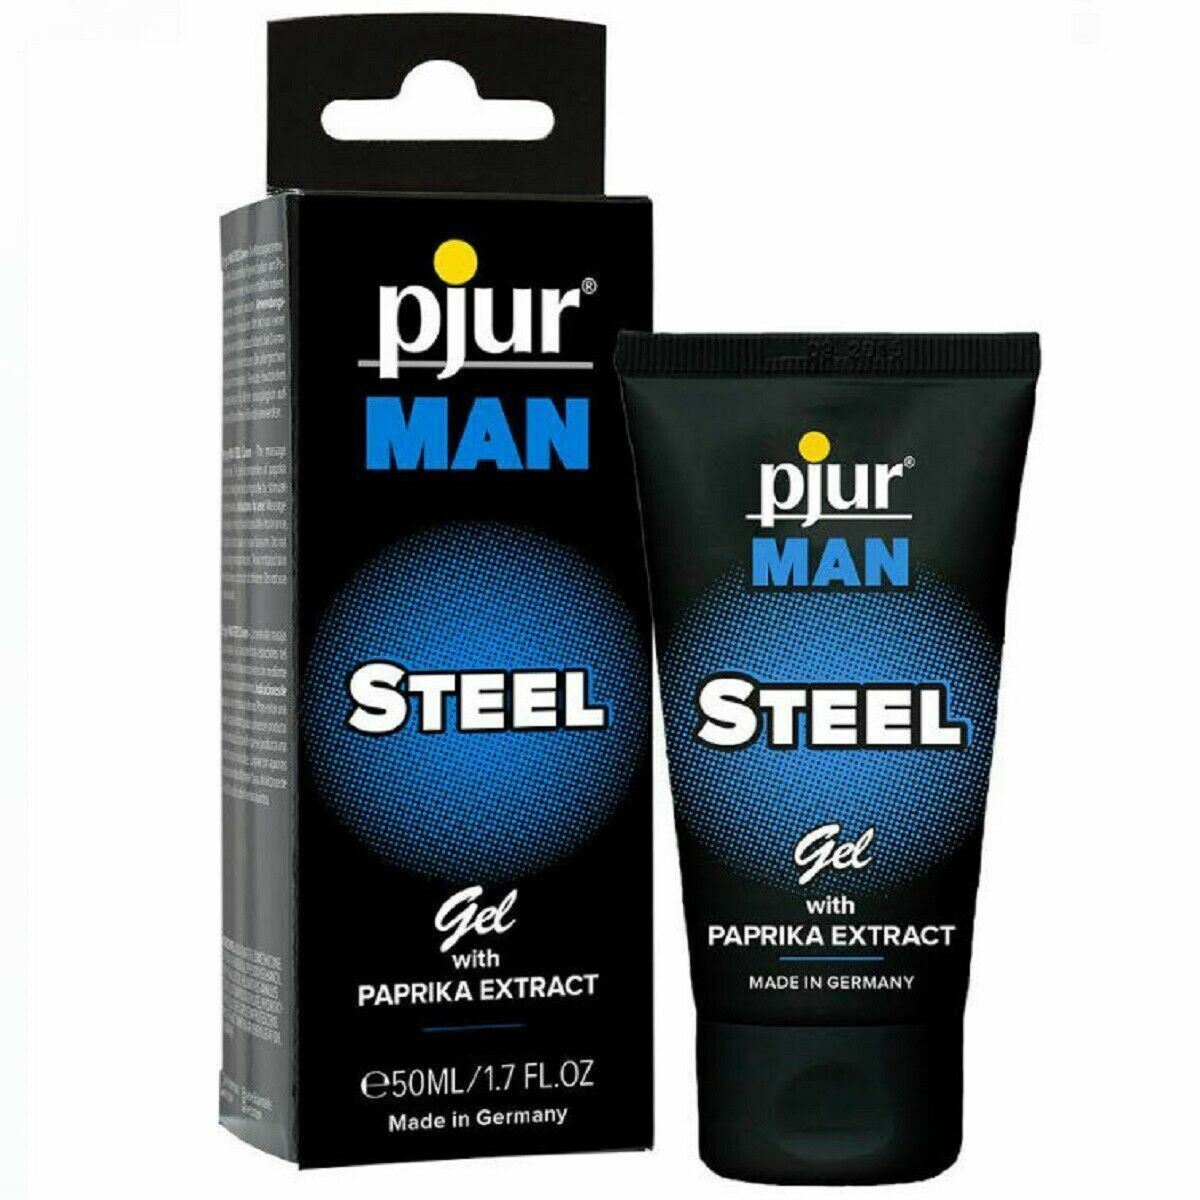 PJUR Man Steel Gel Stimolante Crema da Massaggio Lubrificante Paprika 1.7fl oz 50ml